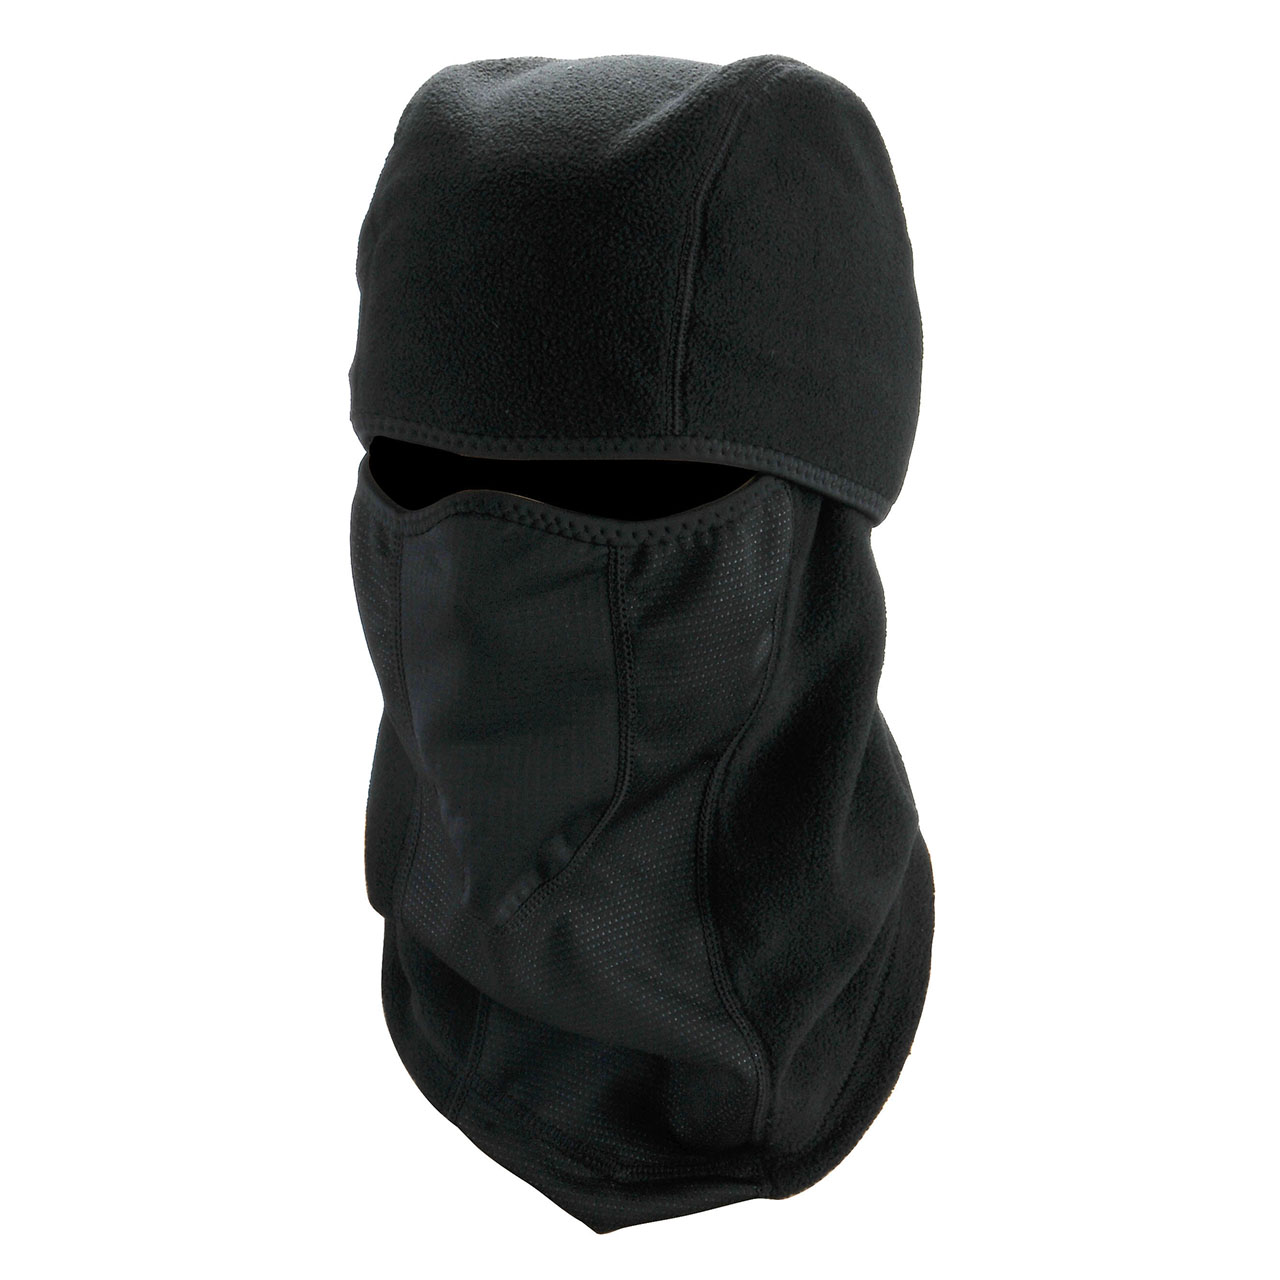 Ski Mask, ACBungji Hinged Balaclava Motorcycle Ski Full Face Mask Hood Scarf Wind Resistant Warmer Winter Outdoor Sports Black